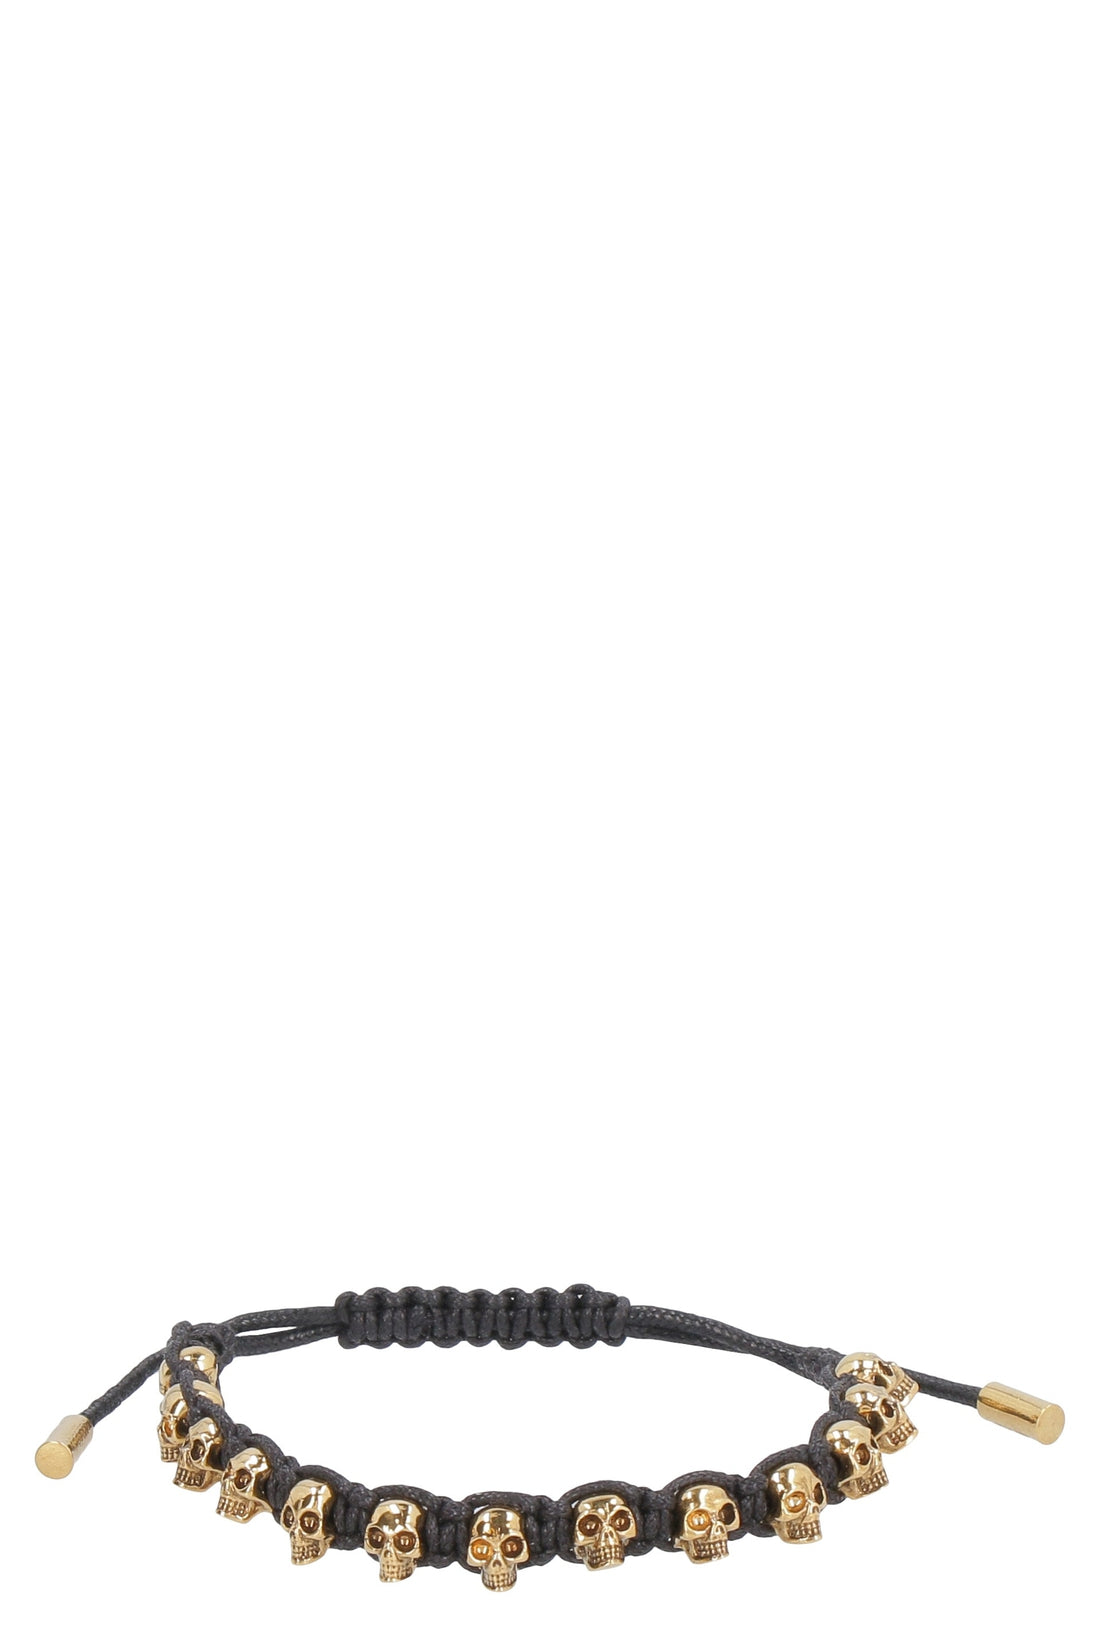 Alexander McQueen-OUTLET-SALE-Multi-skull rope bracelet-ARCHIVIST